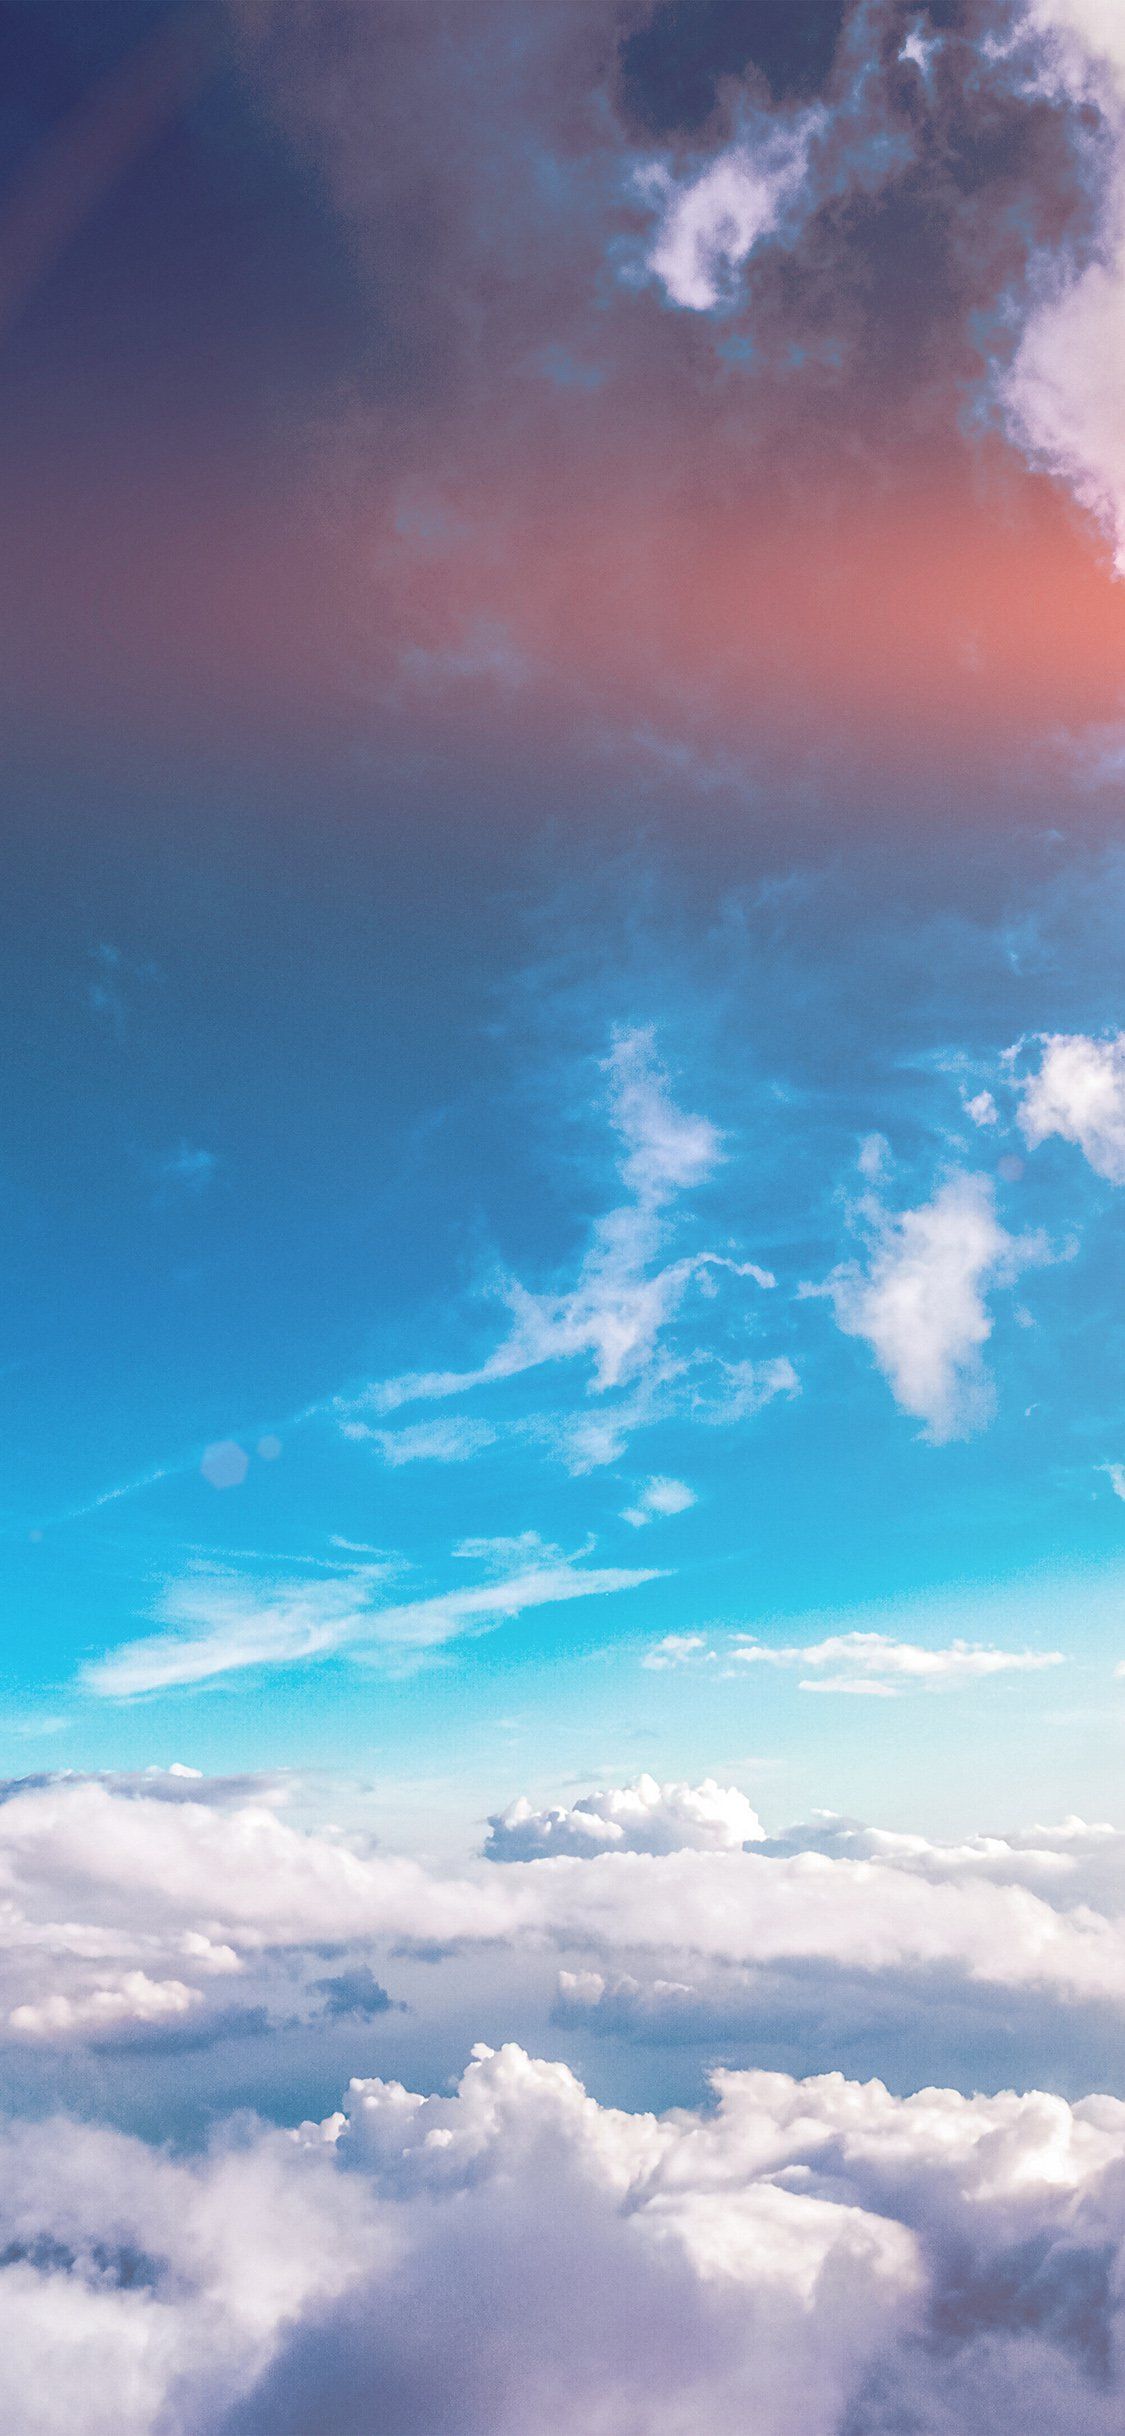 Verano soleado bengala iPhone X fondo de pantalla | Naturaleza en 2019 | Nube